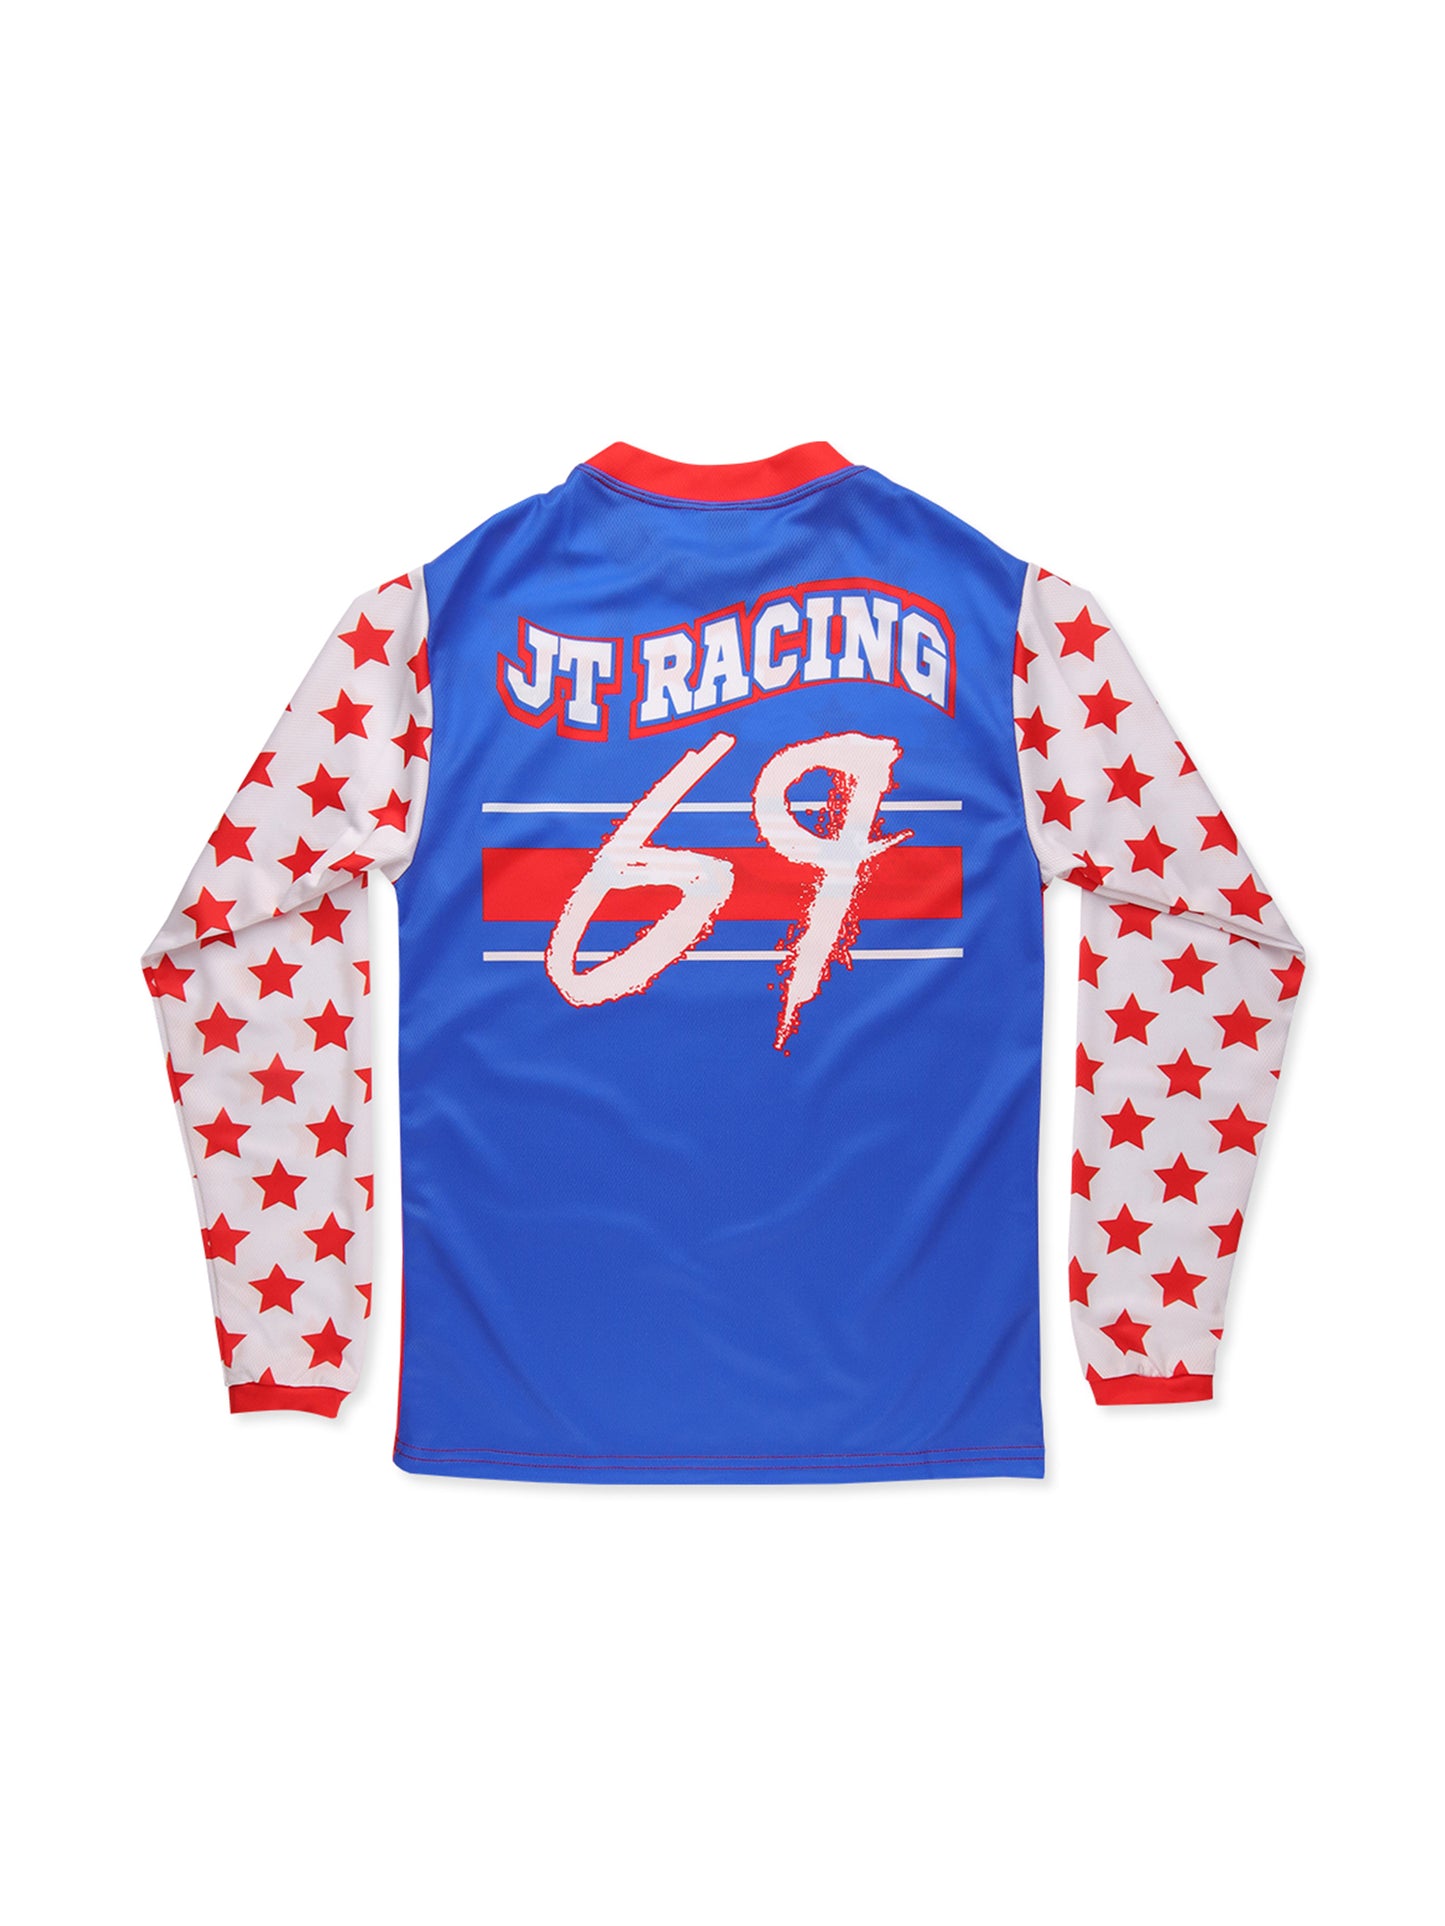 JT Racing Rock Star Jersey